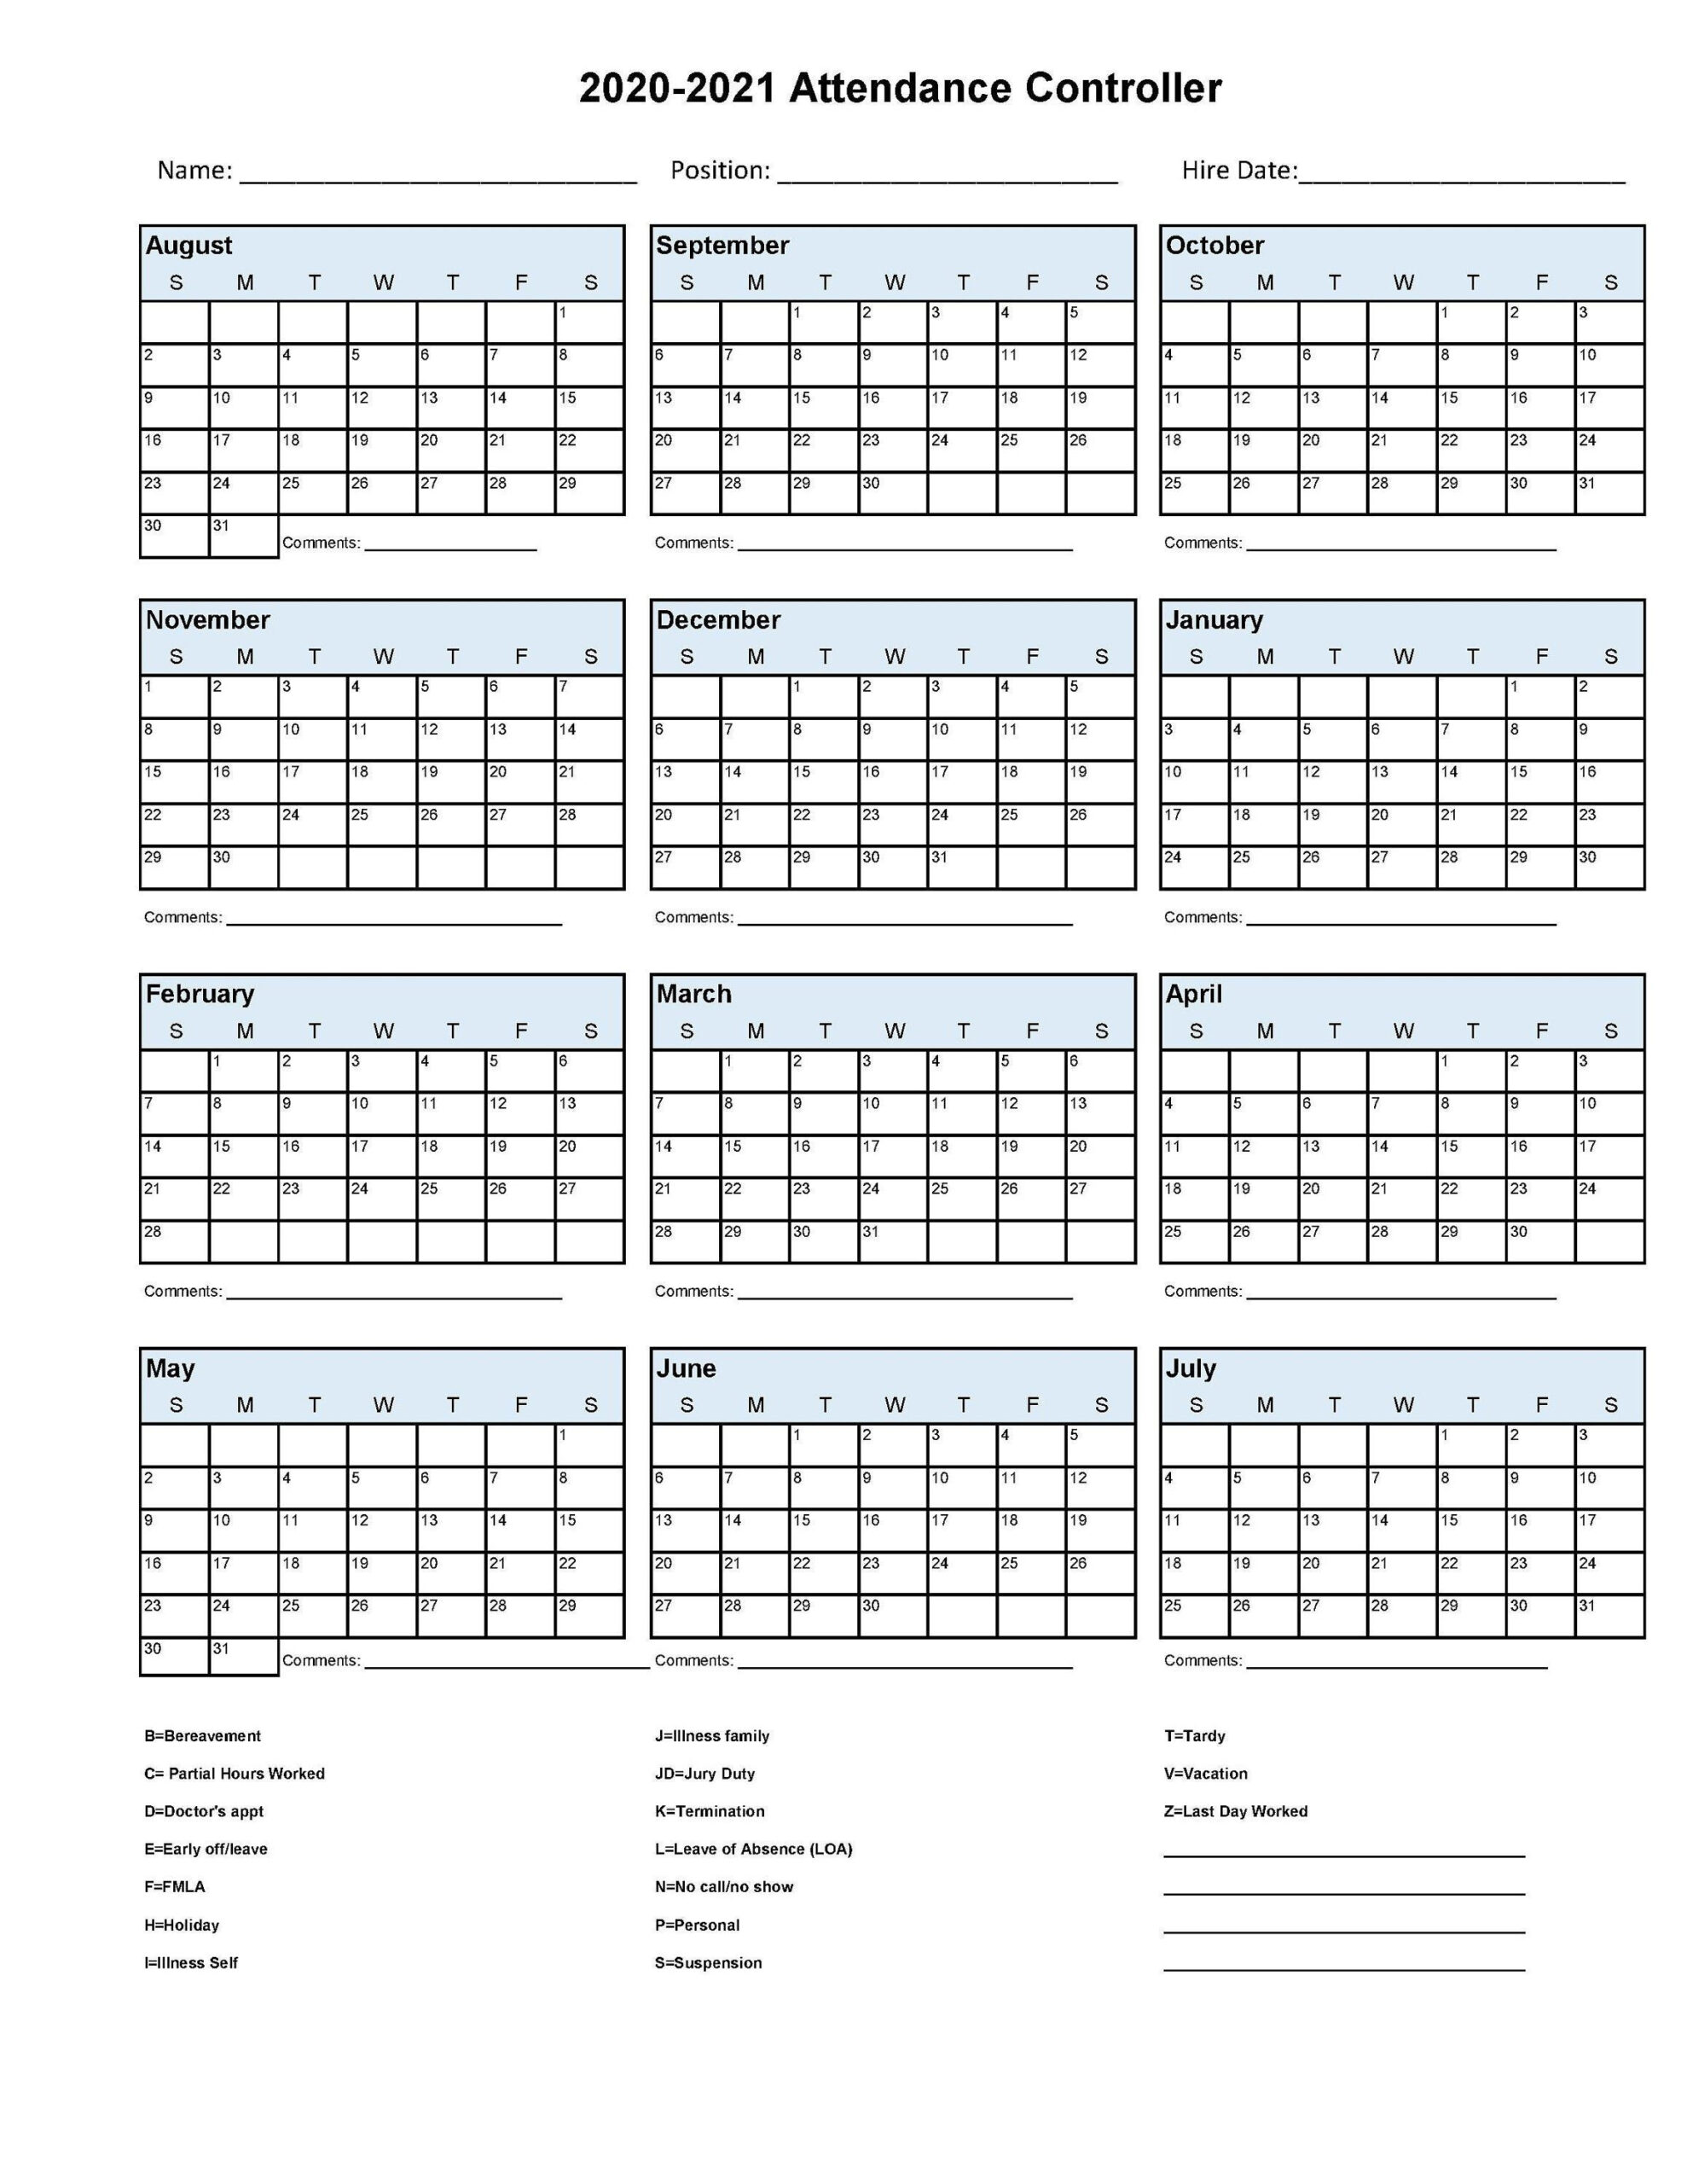 Attendance Record Calendar Free Printable Employee-Printable 2021 Employee Attendance Controller